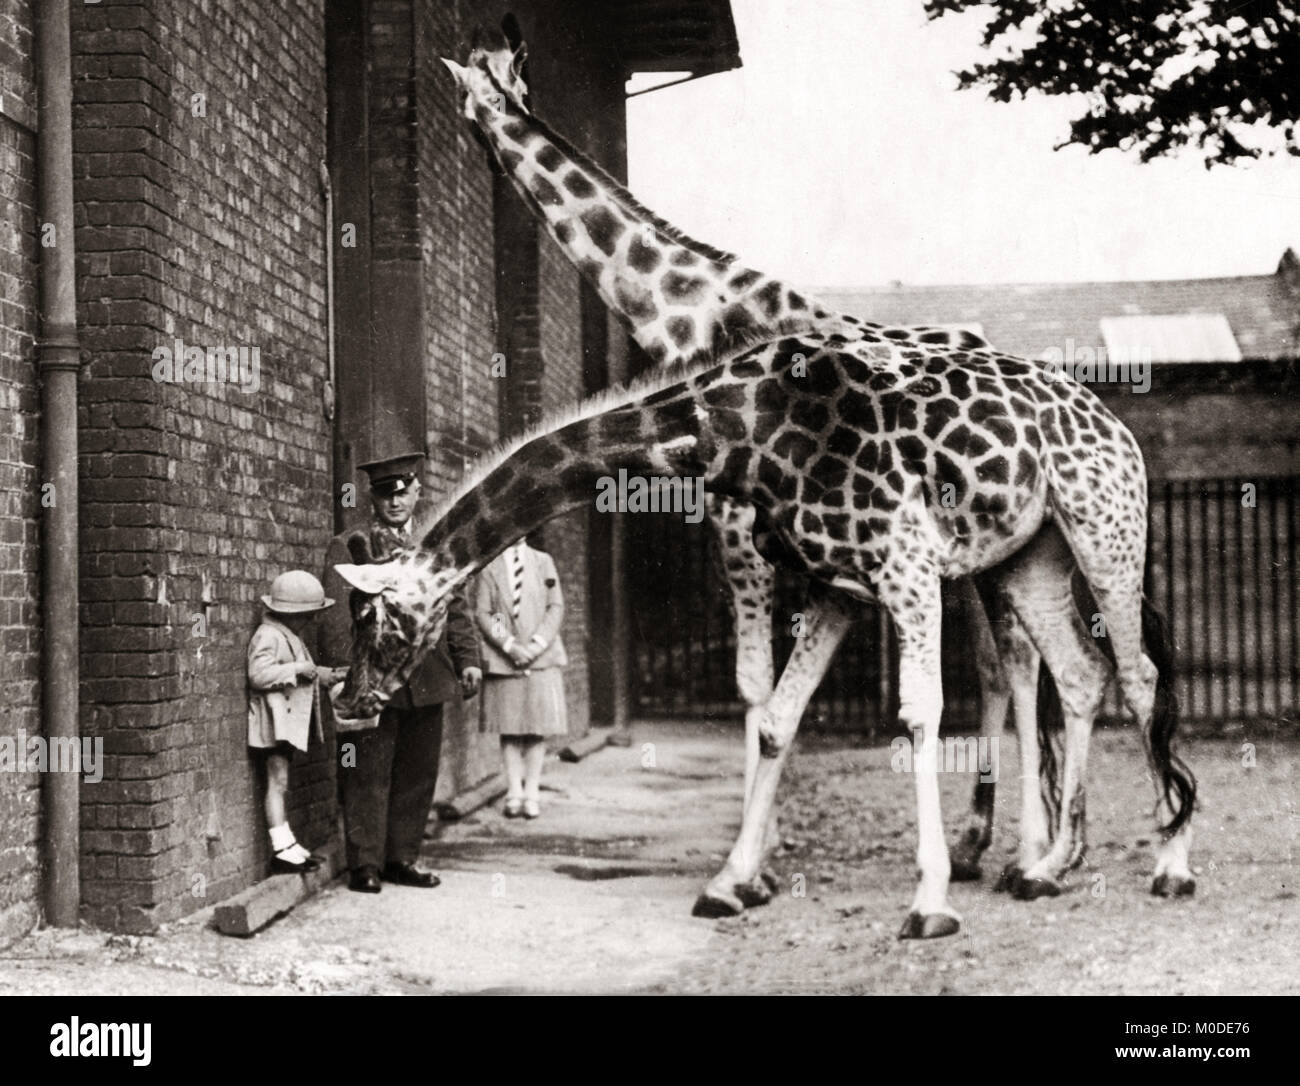 1930's press photo - feeding giraffes at London zoo. Stock Photo